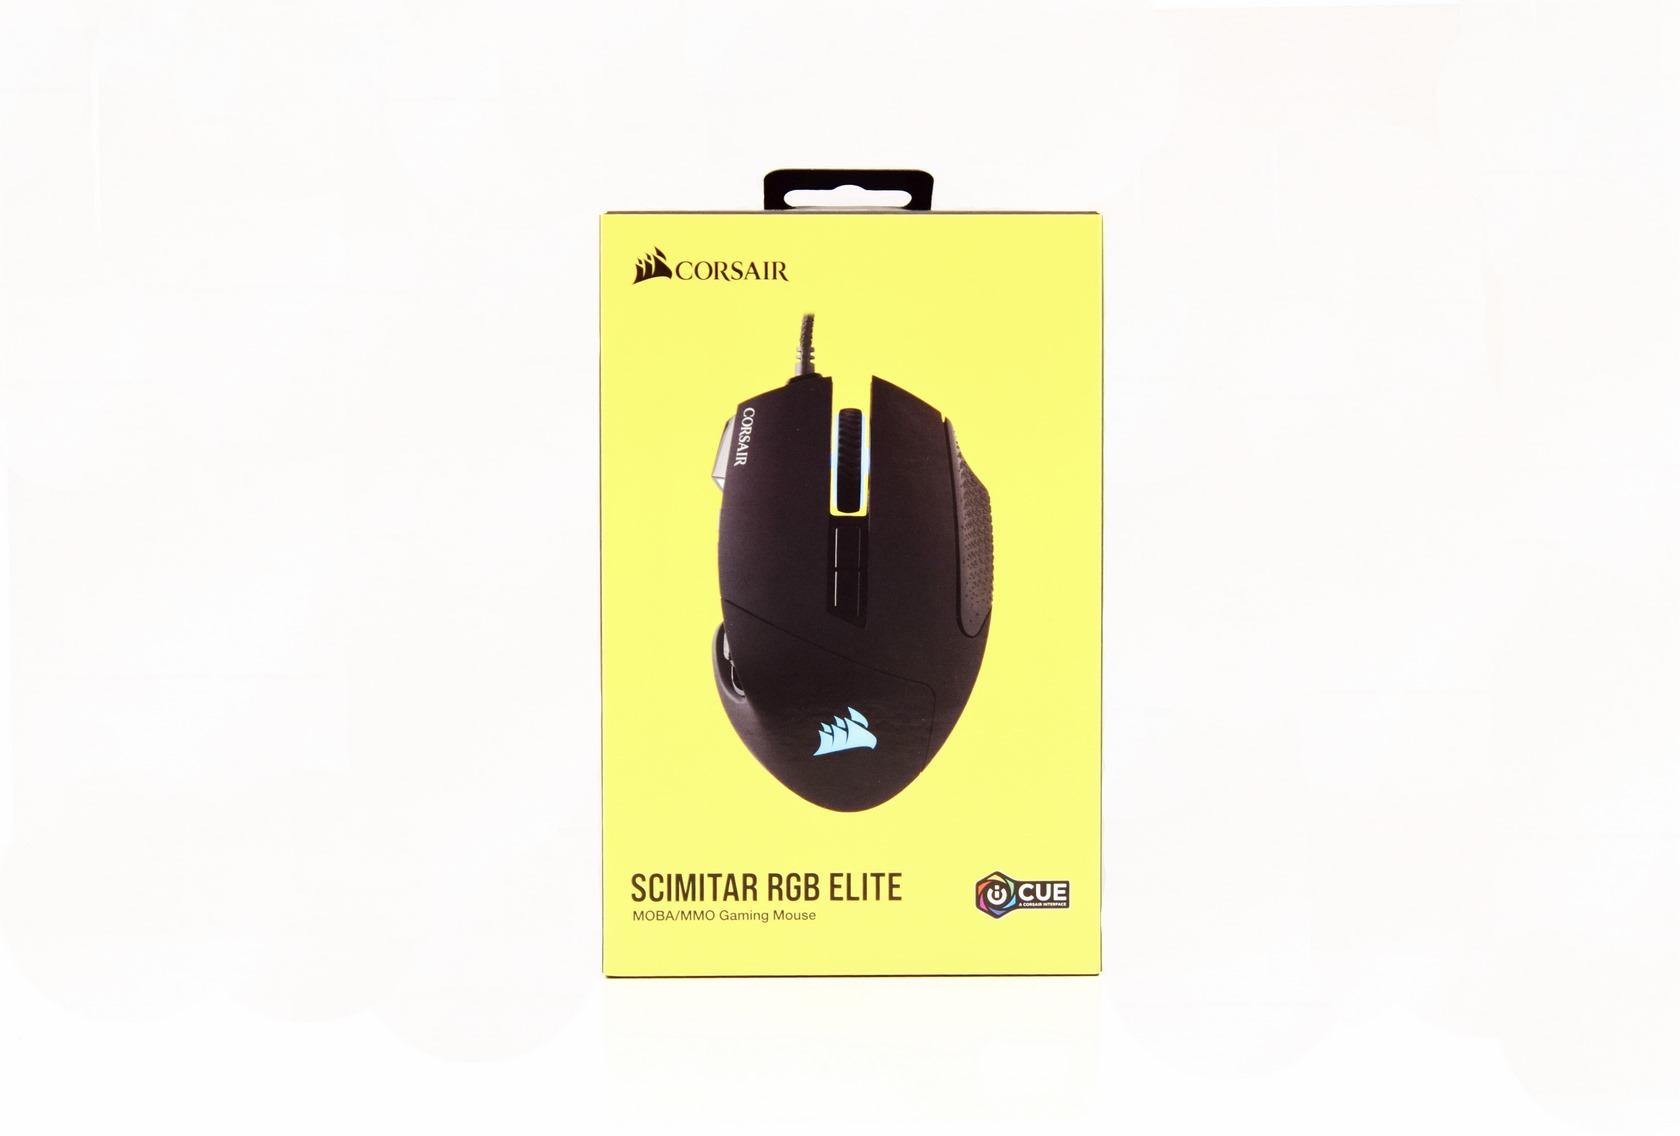 CORSAIR Scimitar RGB Elite MOBA/MMO Gaming Mouse Review